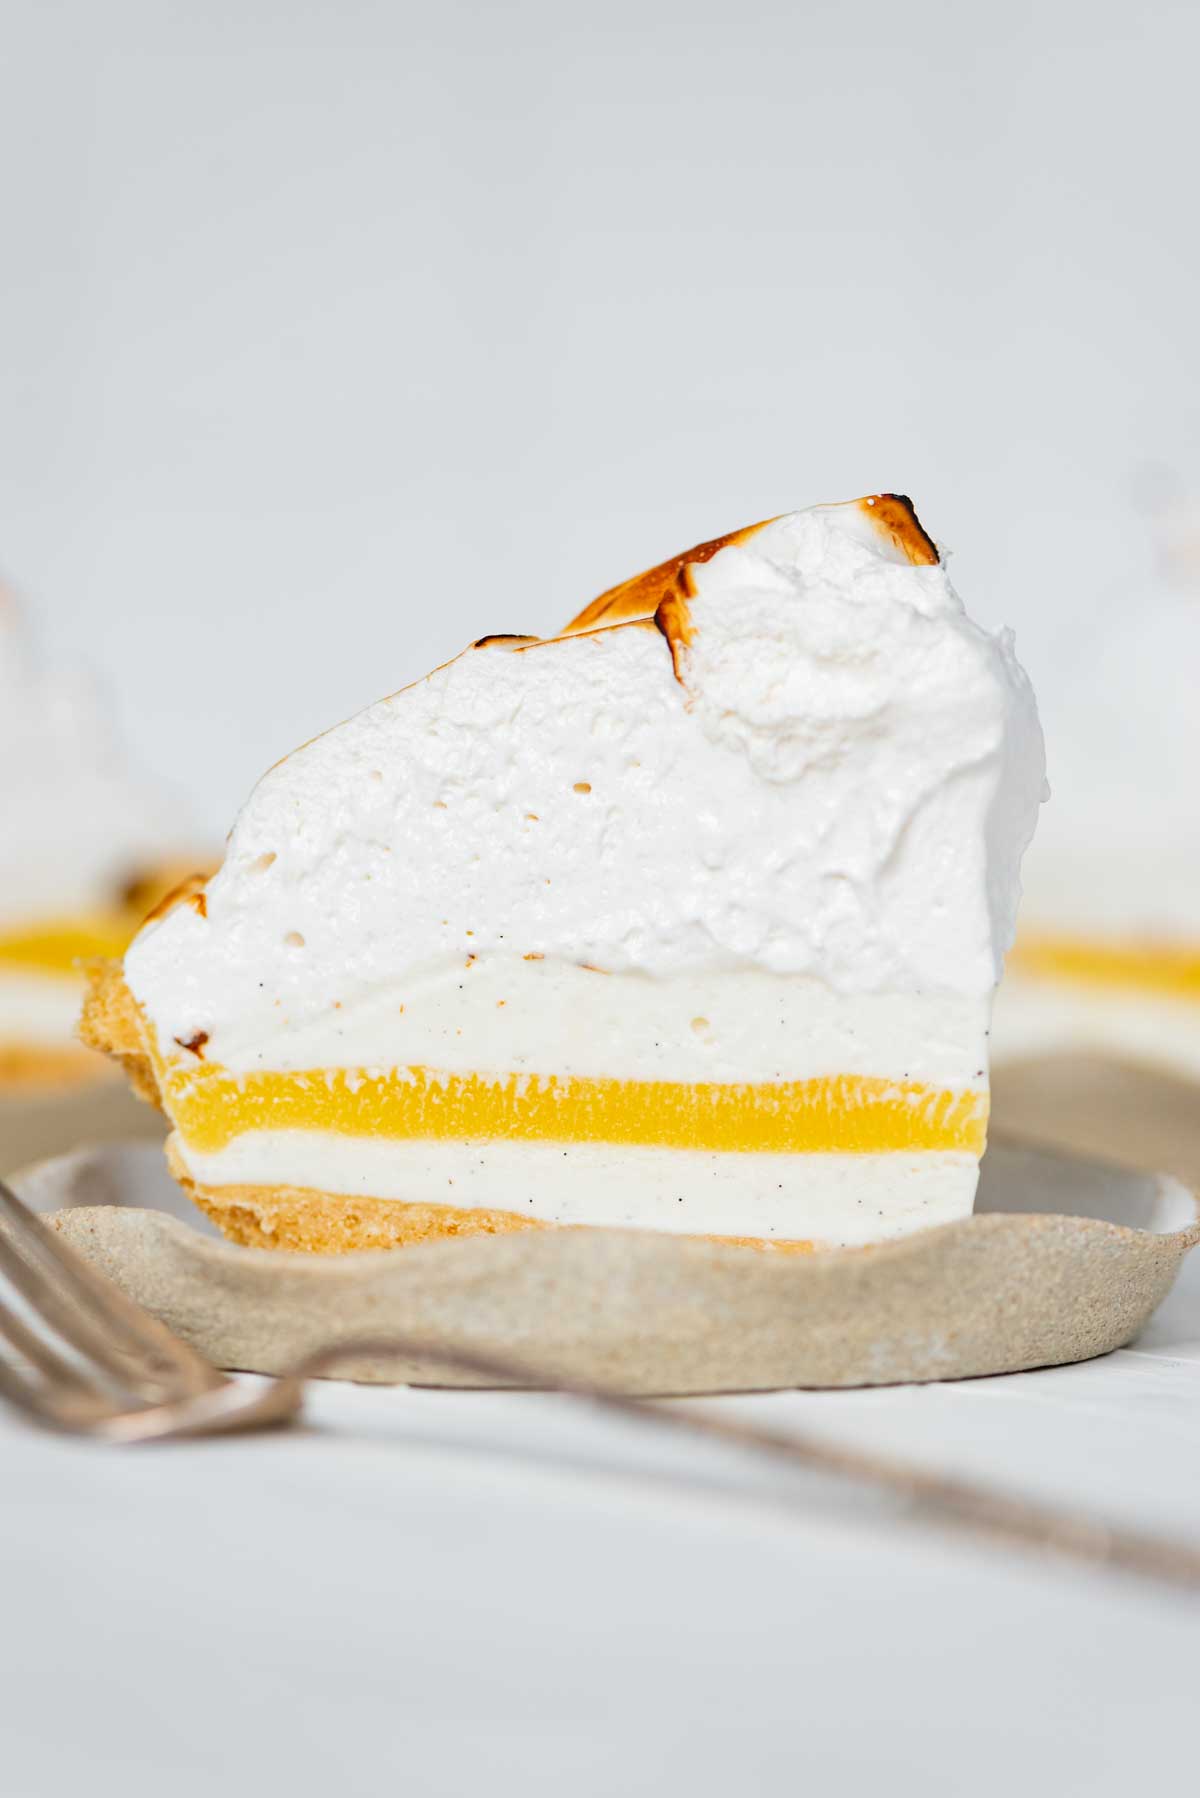 Slices of lemon meringue ice cream pie on dessert plates from BeyondtheButter.com | © Beyond the Butter®